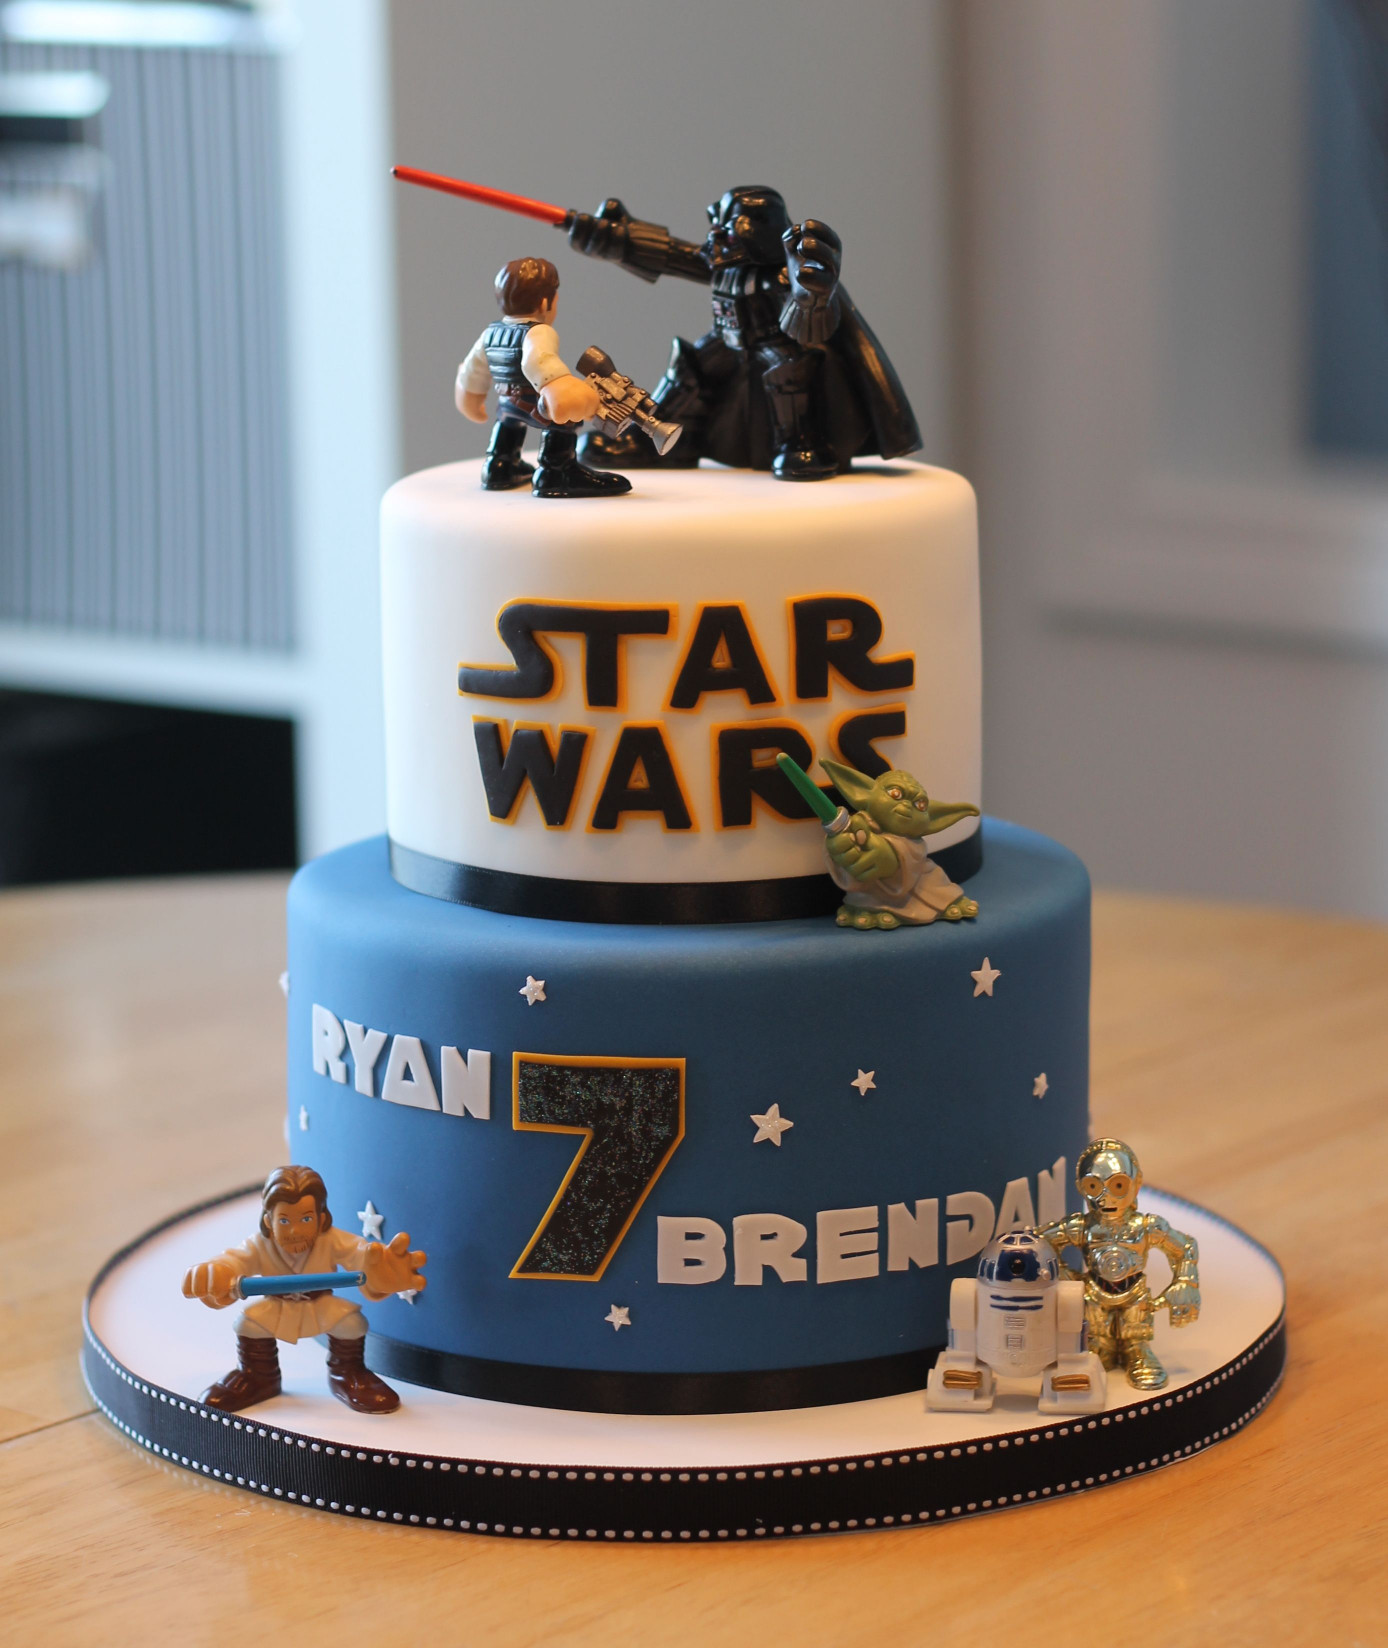 Star Wars Birthday Cake
 Two tier Star Wars themed birthday cake for twins Ryan